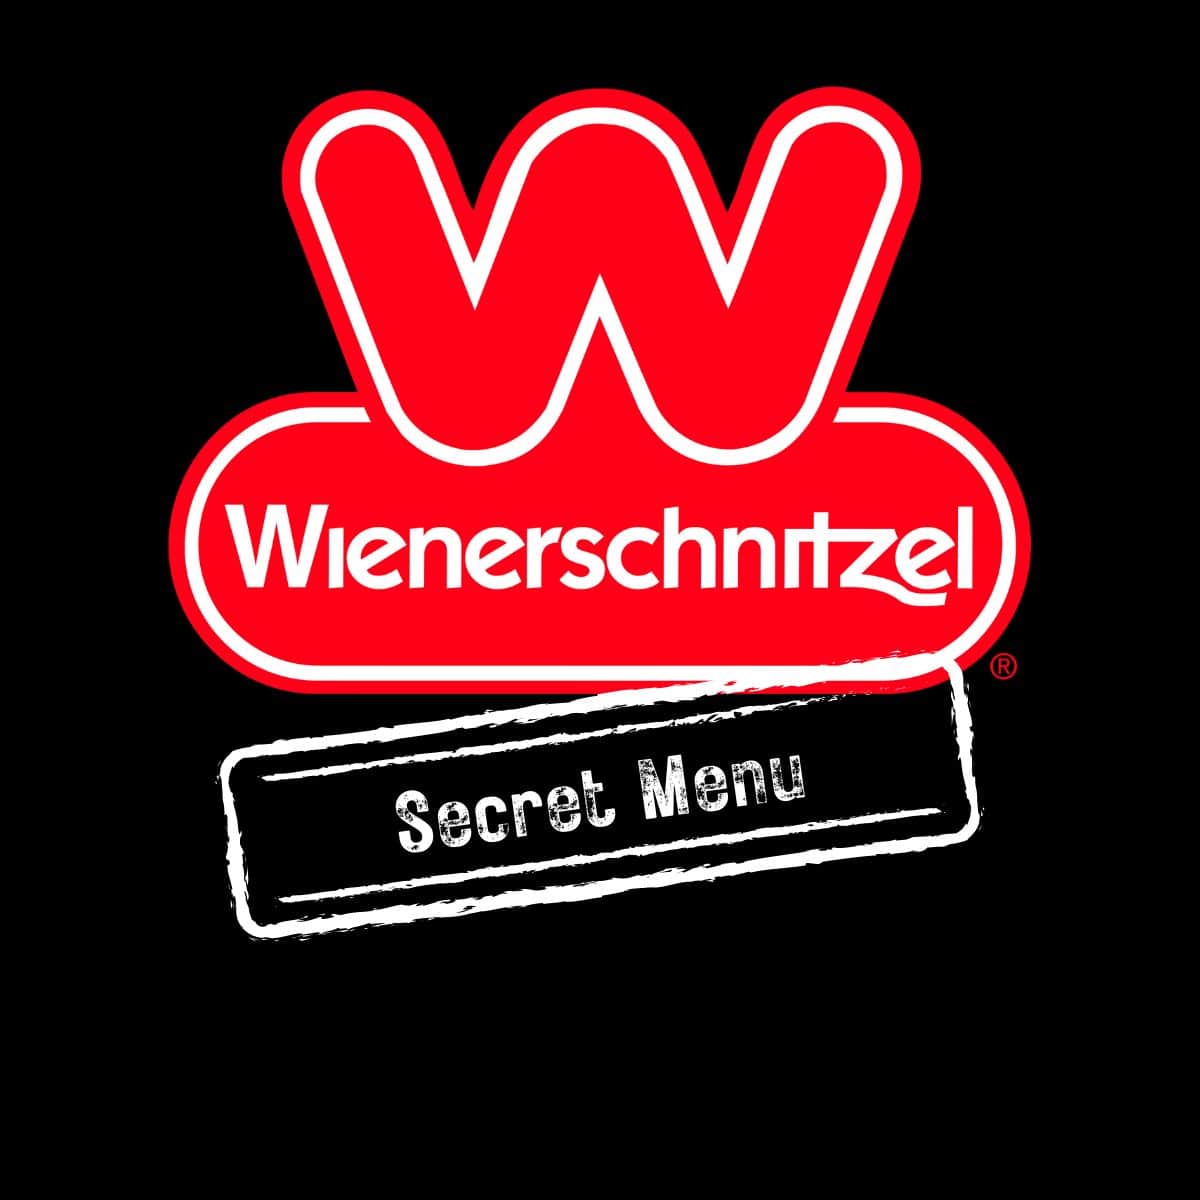 Wienerschnitzel Secret Menu